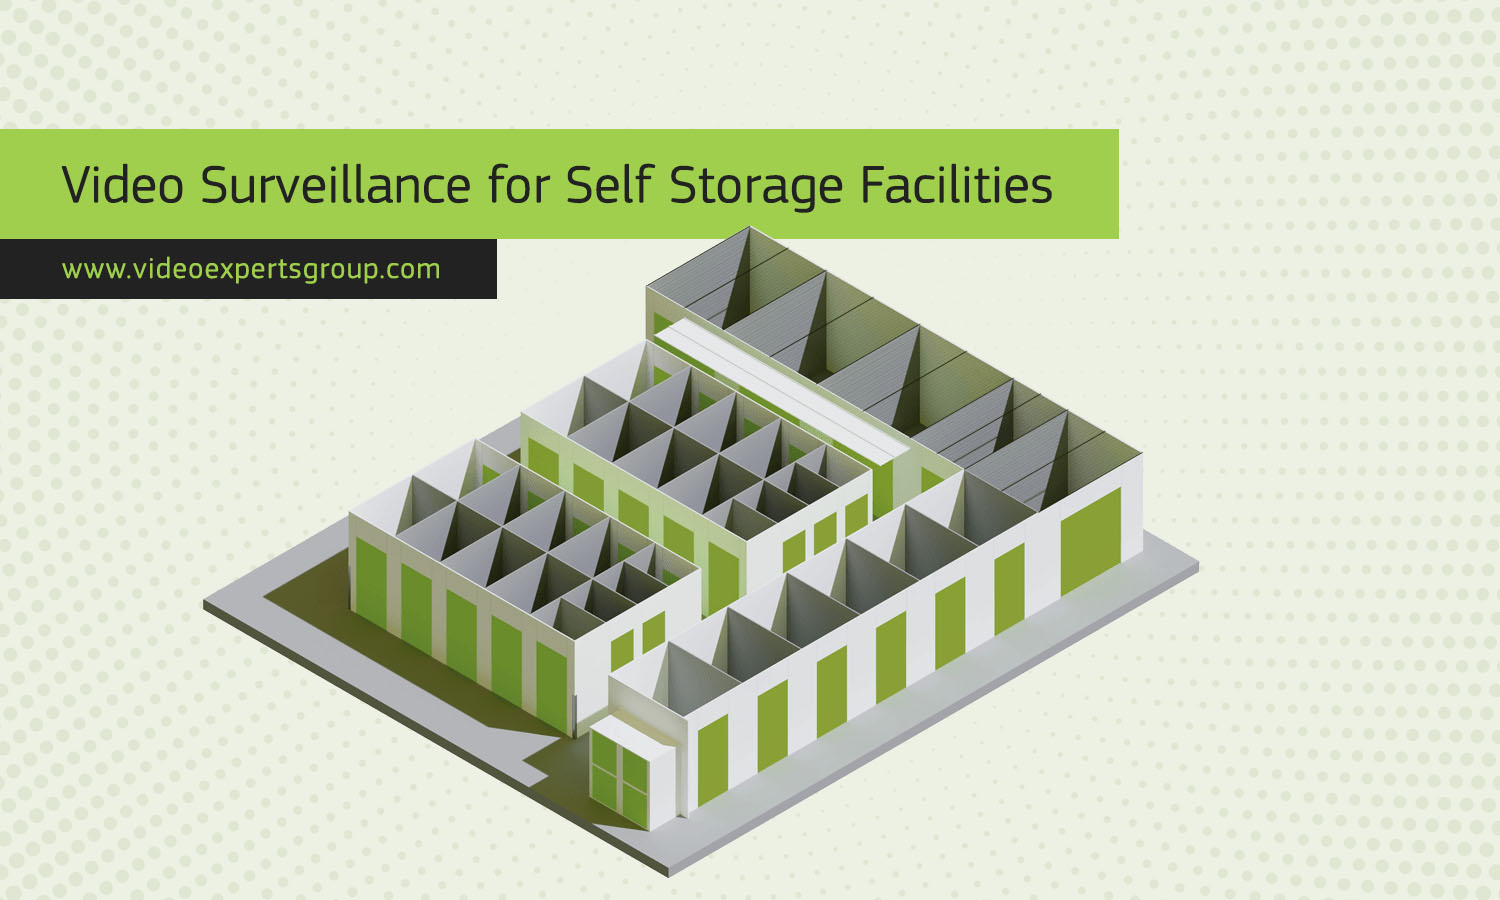 Remote Video Surveillance & Monitoring for Self Storage Facilities